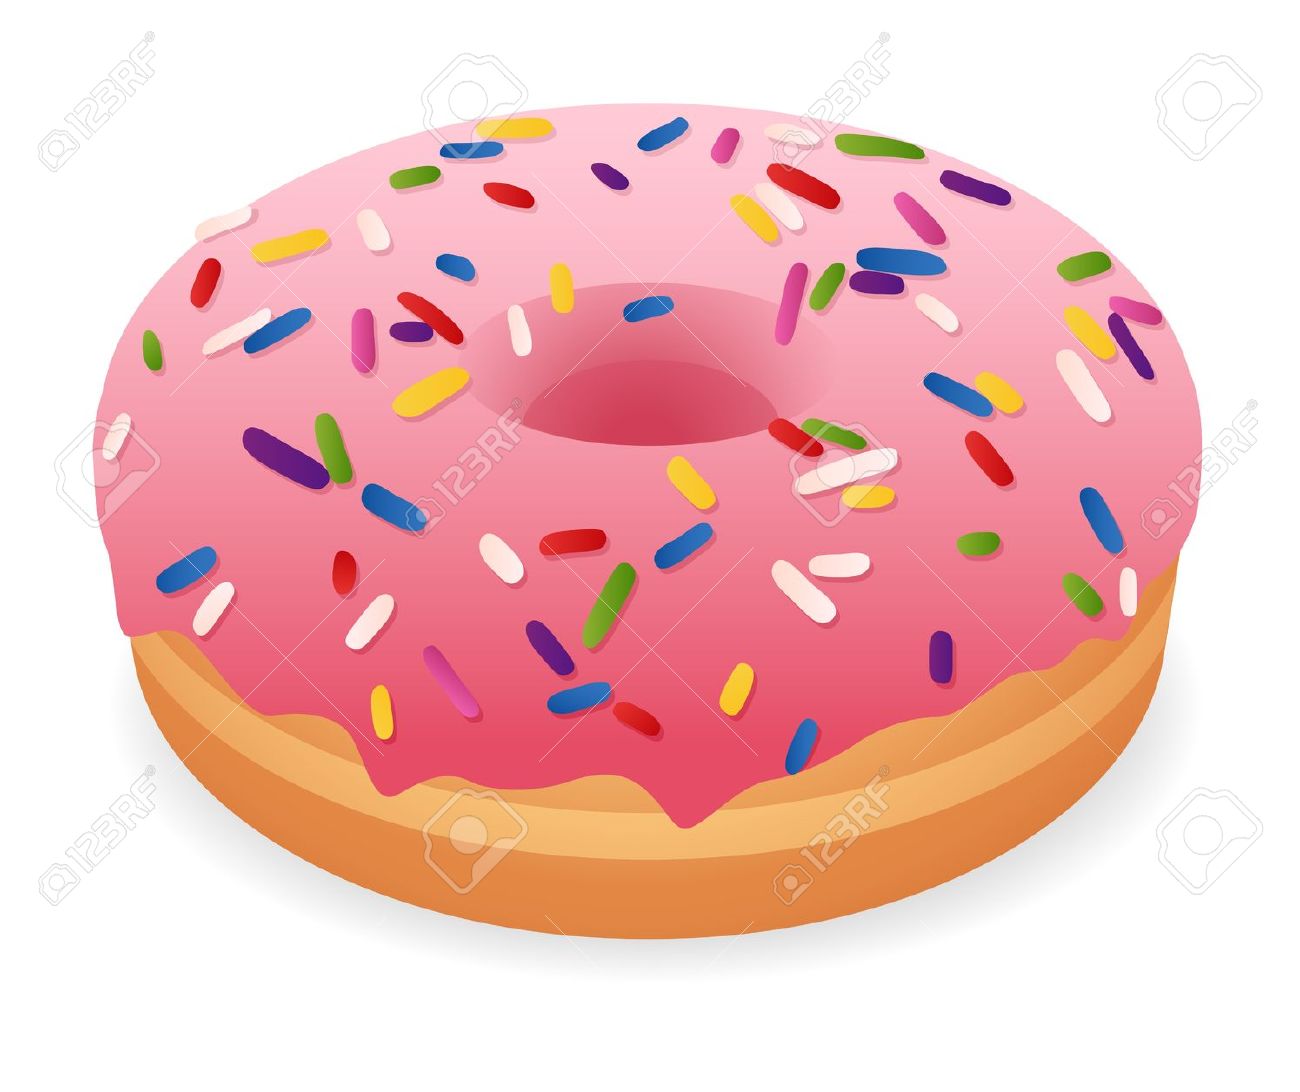 Popular items for doughnuts c